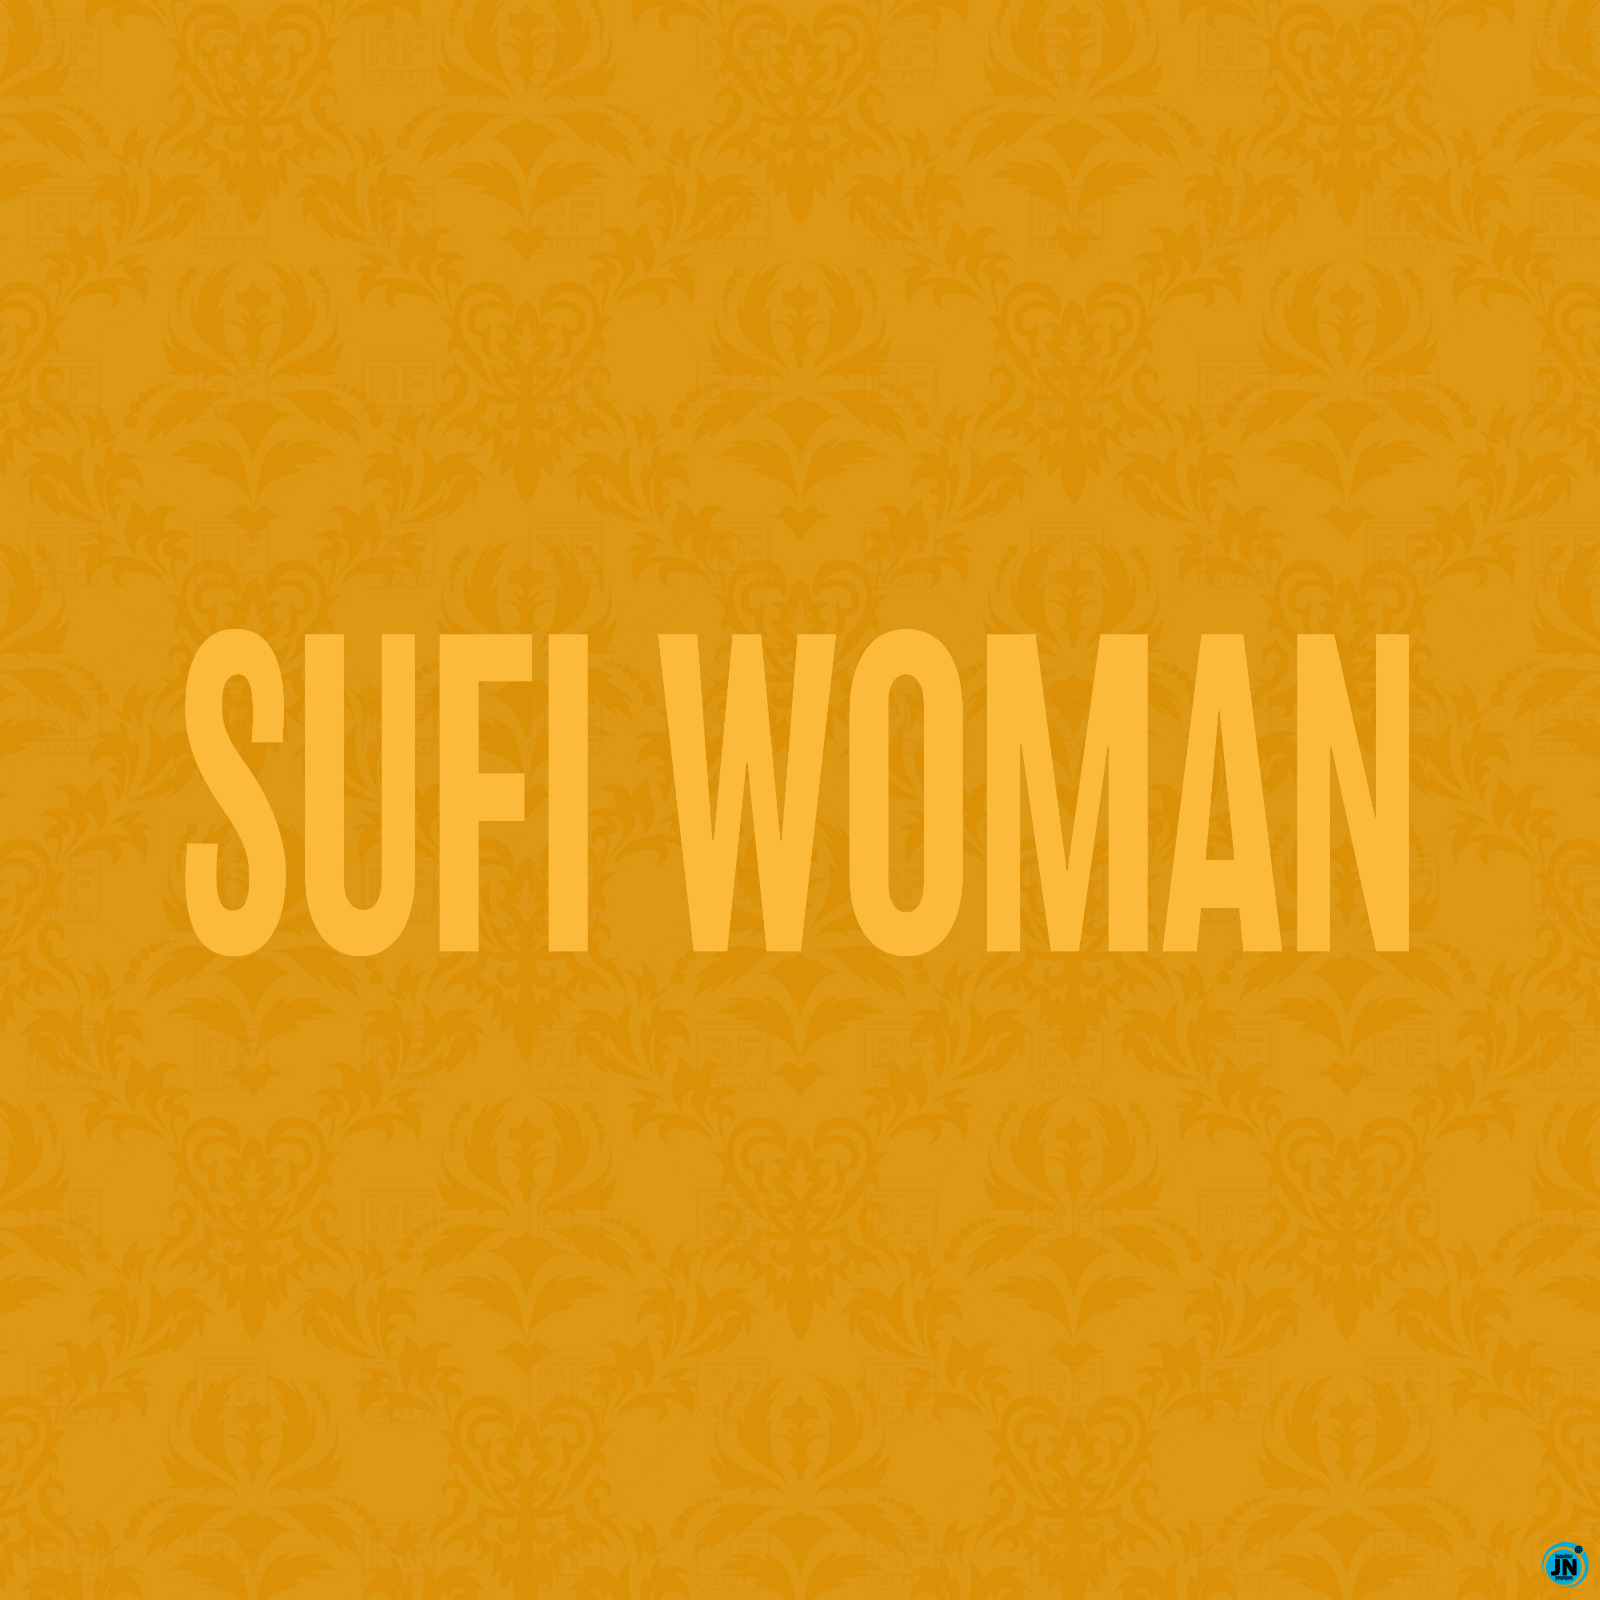 Jidenna - Sufi Woman   Mp3 Download lyrics